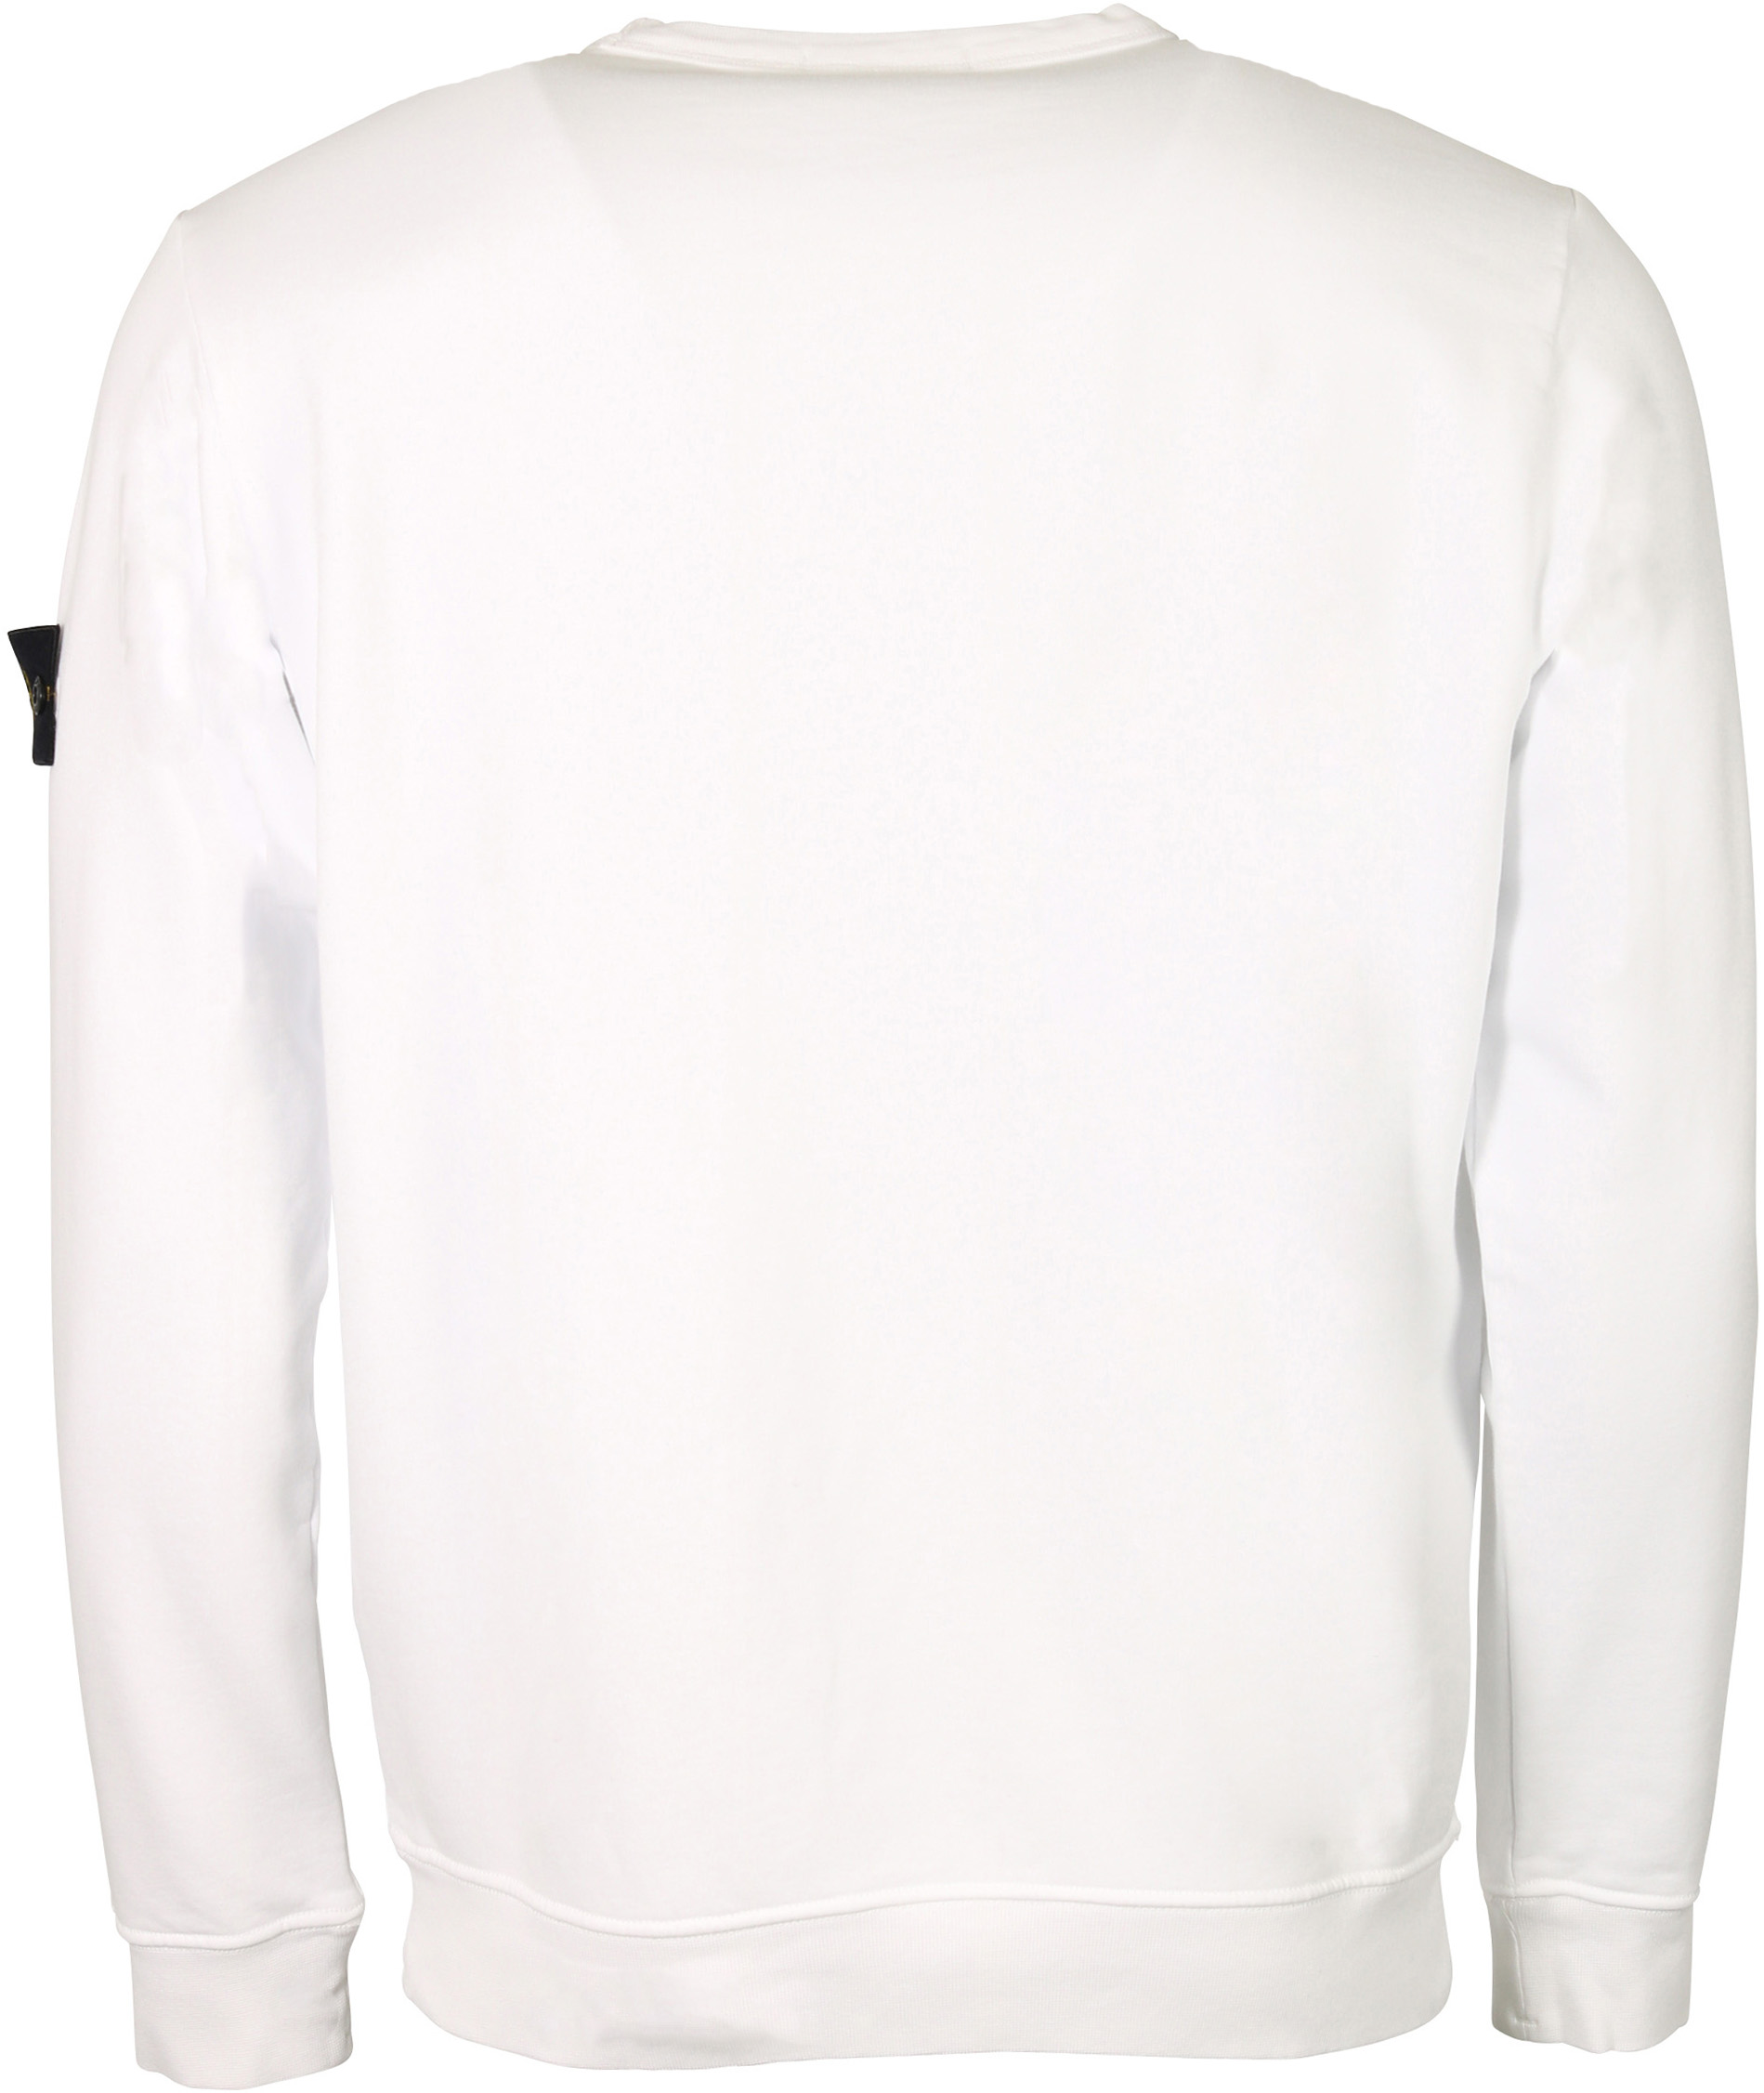 Stone Island Sweatshirt White L